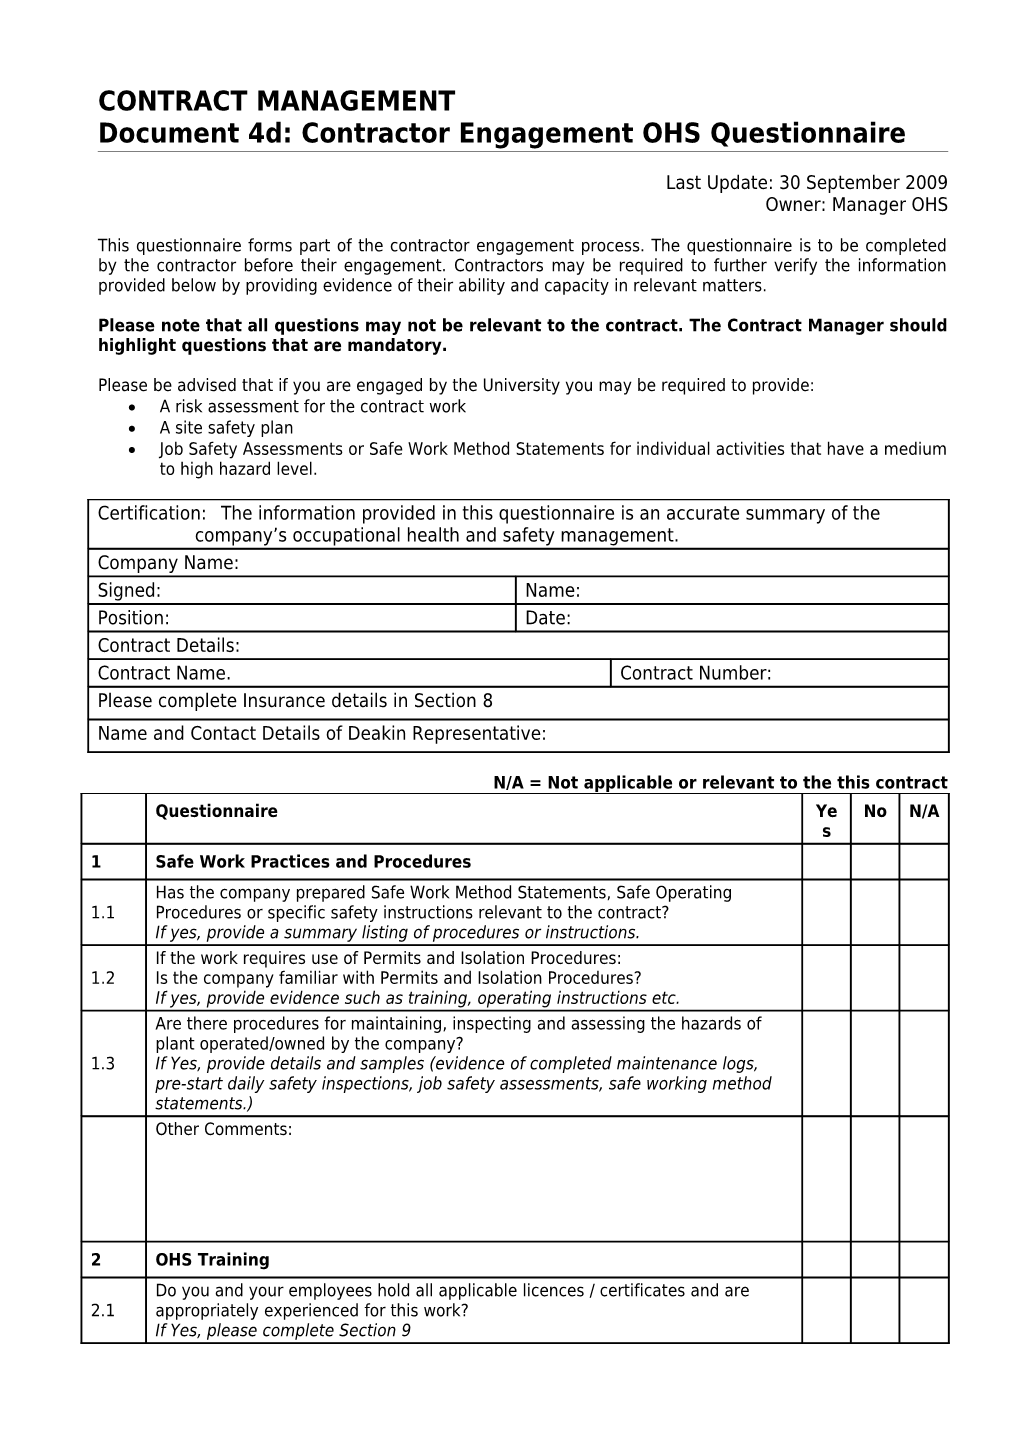 Contractor Engagement OHS Questionnaire